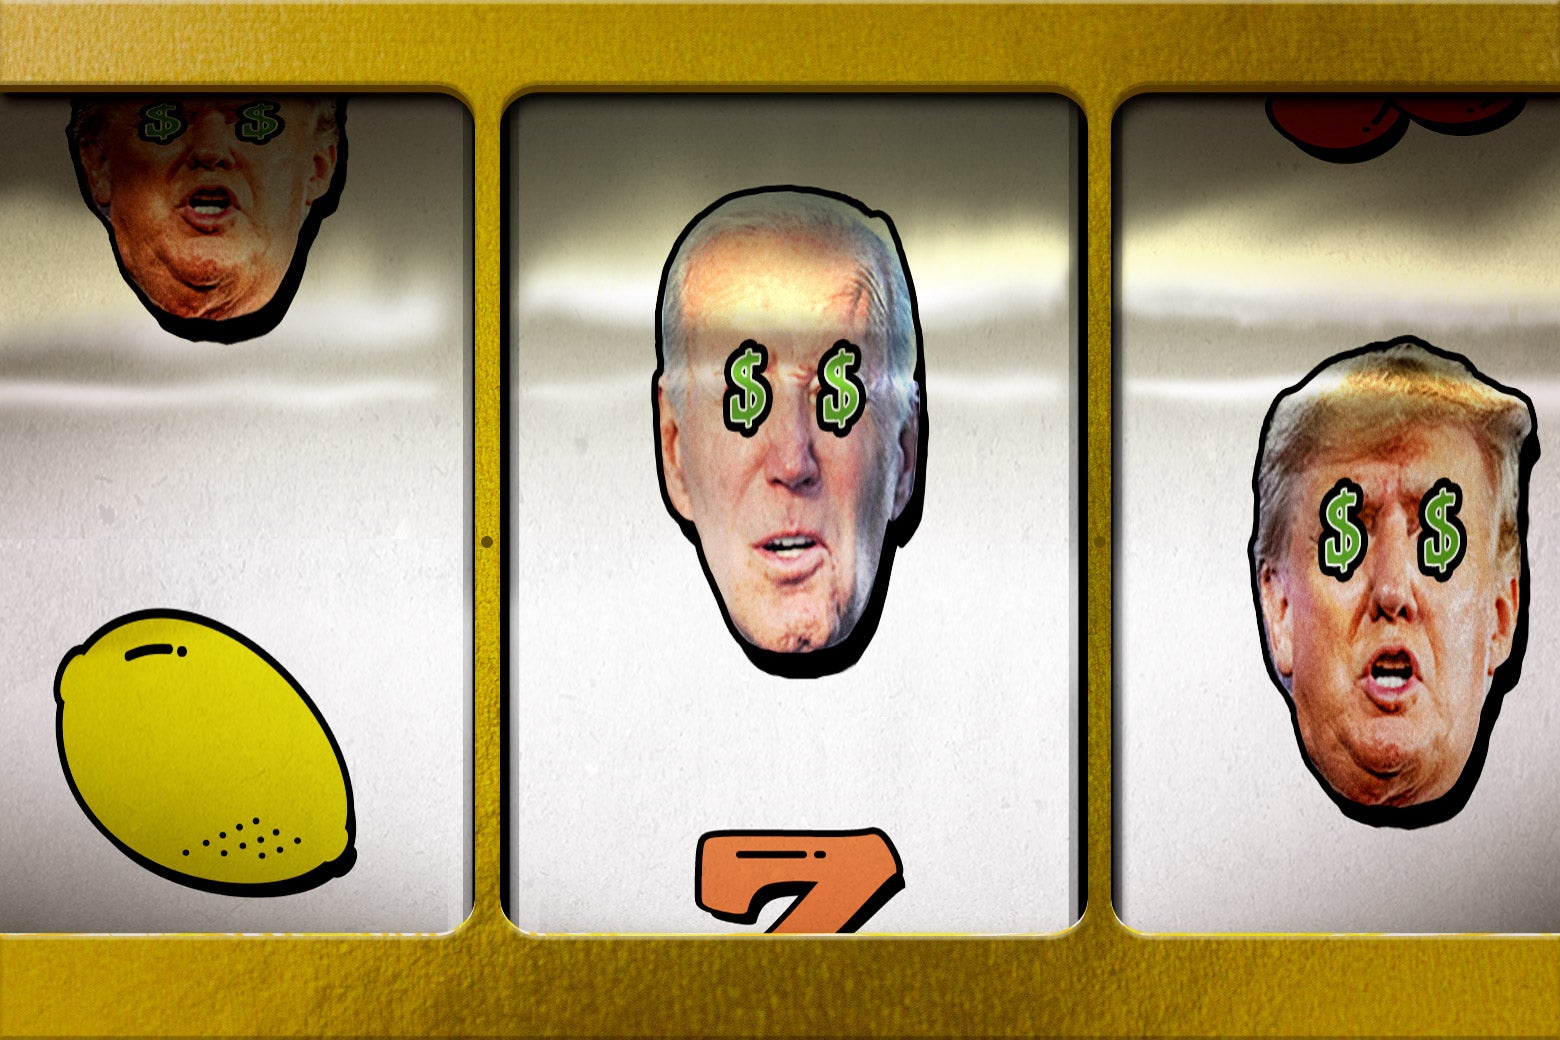 A slot machine with Trump and Biden heads.